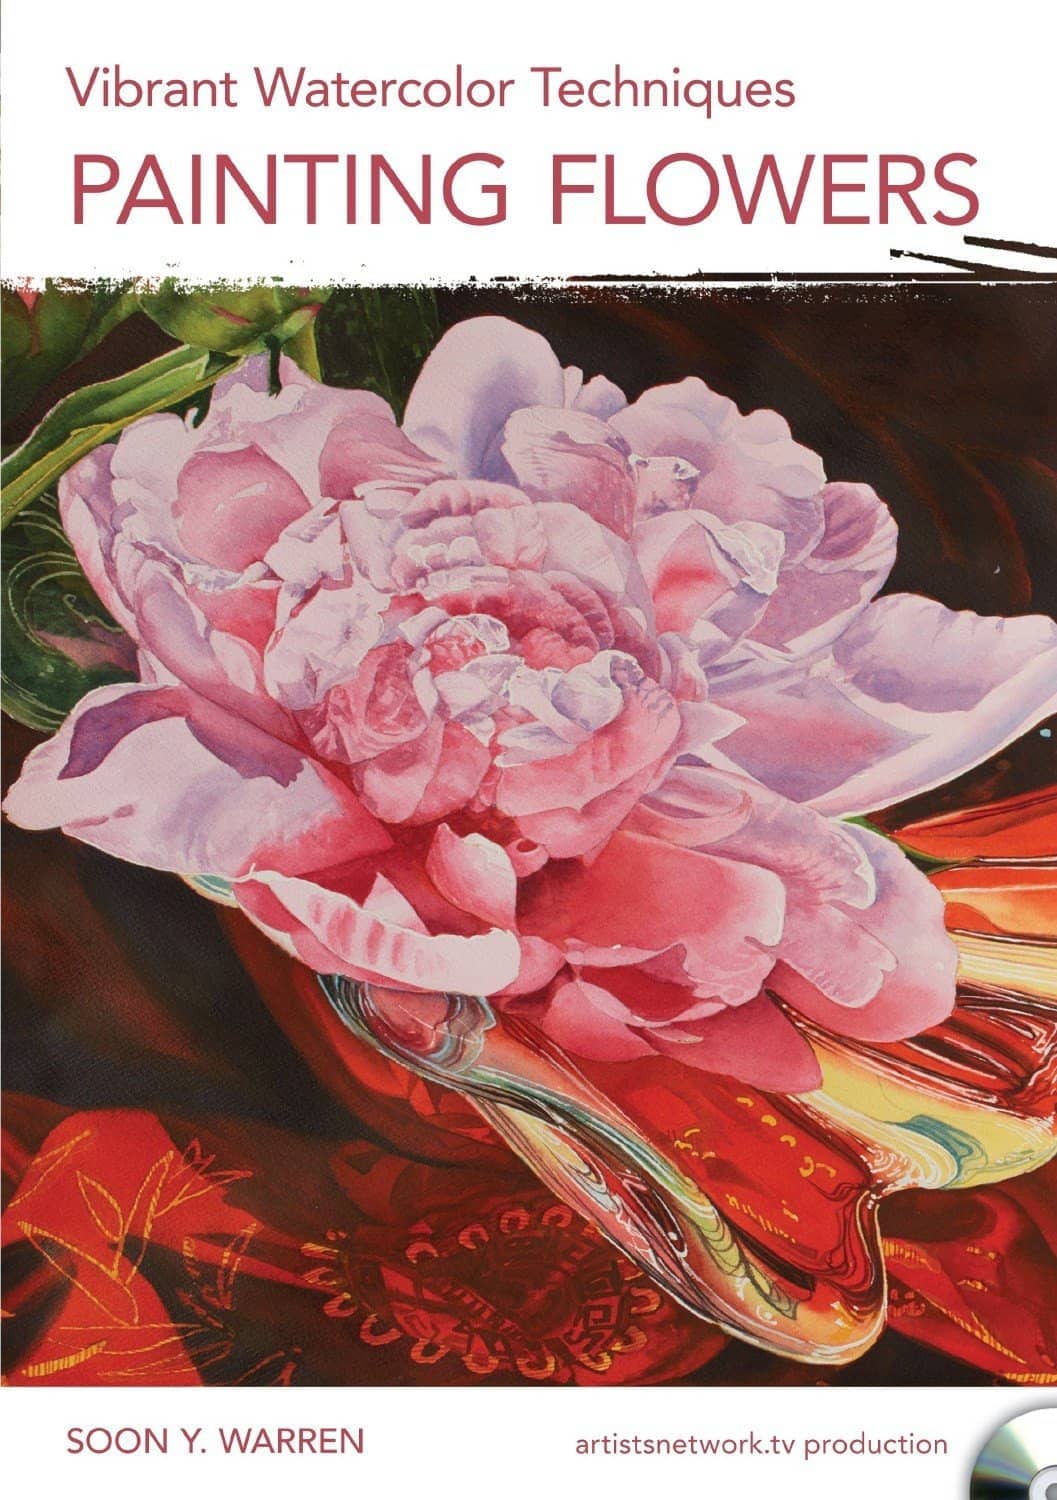 Soon Y. Warren: Vibrant Watercolor Techniques - Painting Flowers